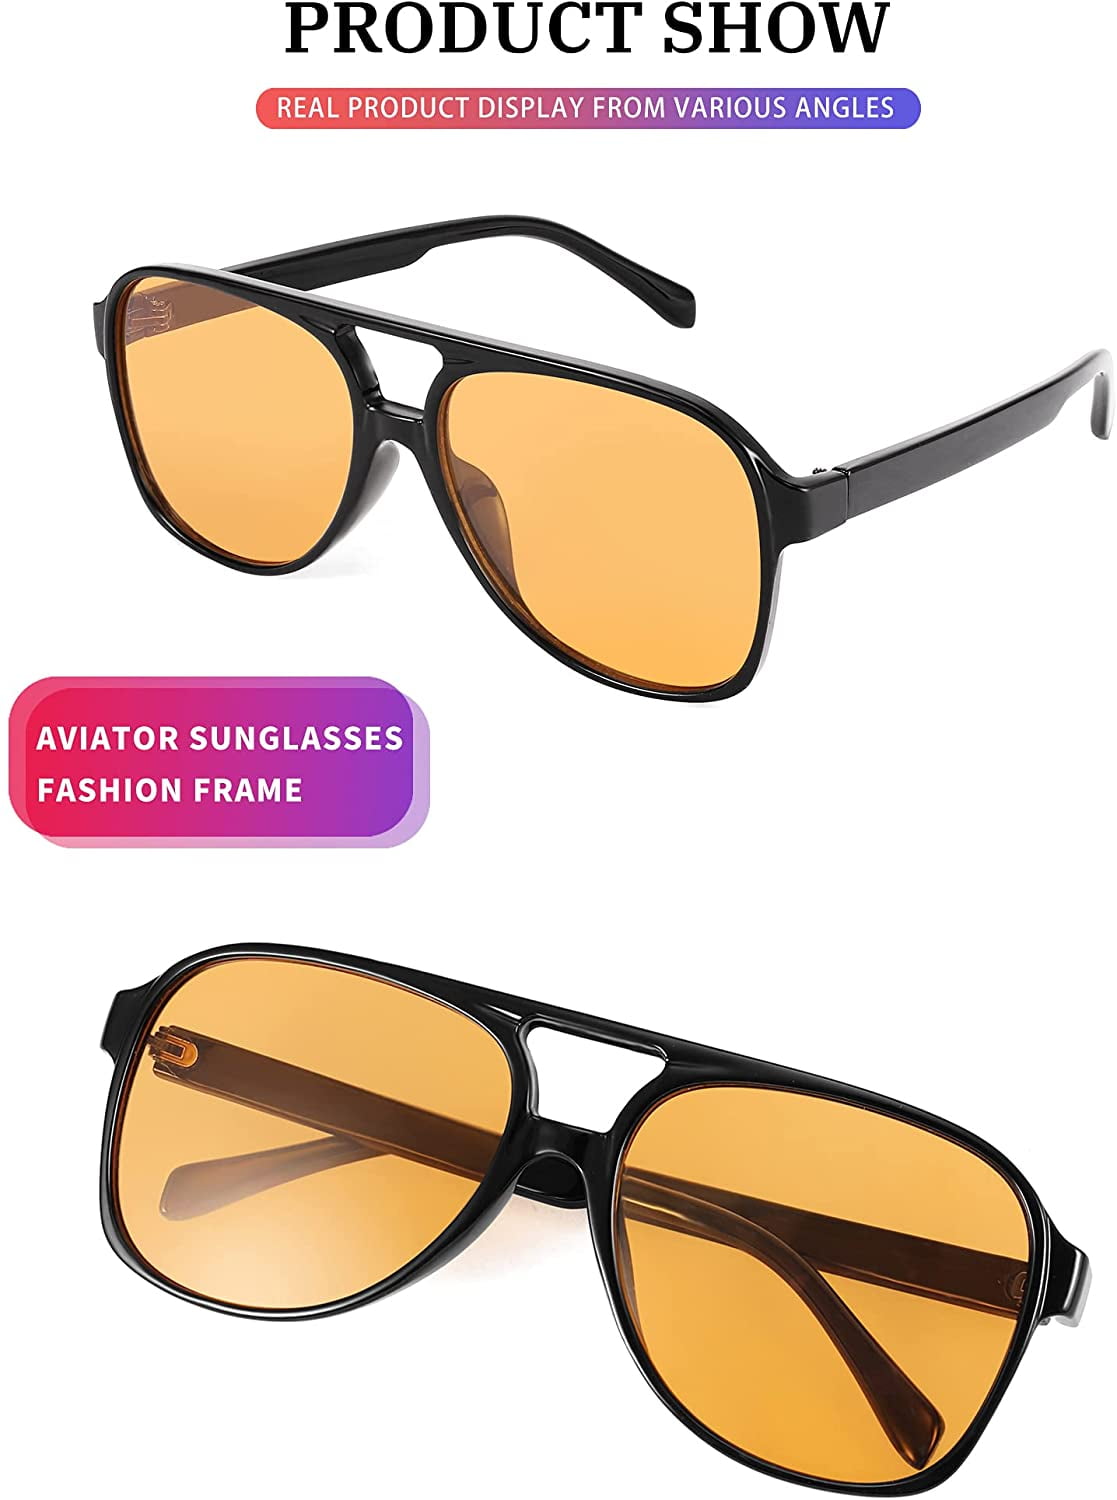 Feisedy Retro 70s Aviator Sunglasses Oversized Classic Fantastically Vintage Round Sun Glasses For Women Men B2924 Silver 57 Millimeters